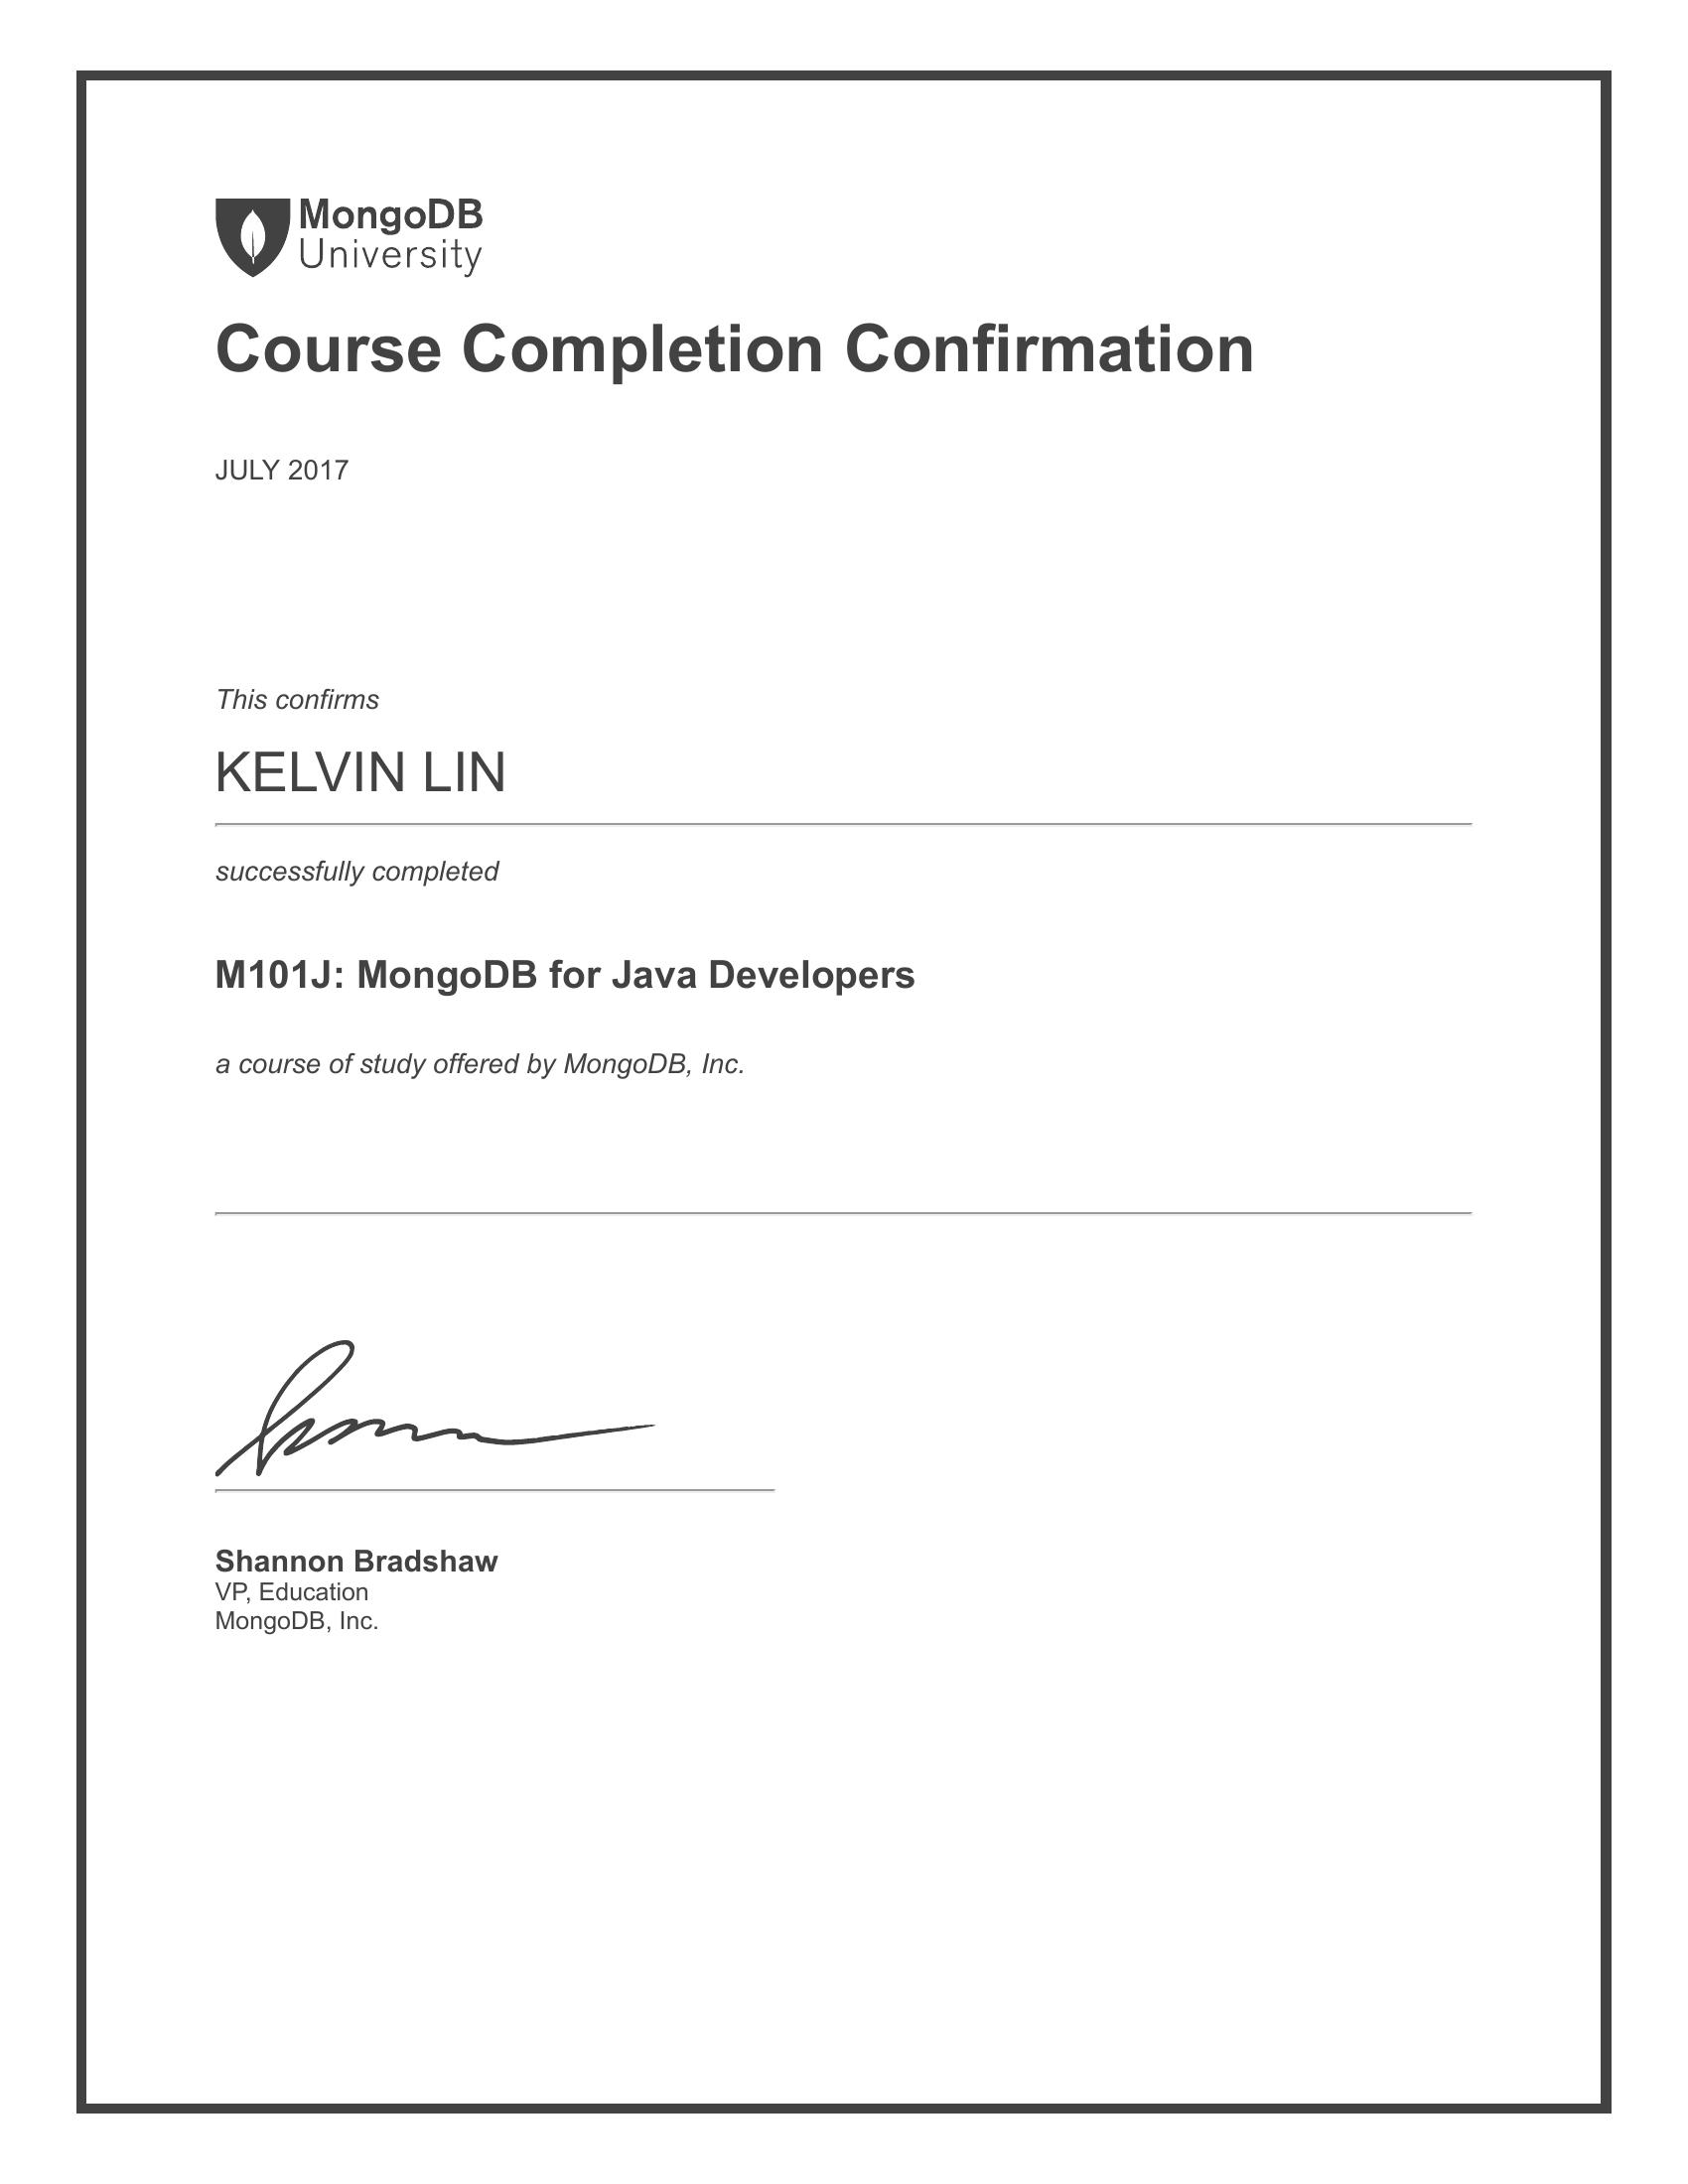 Kelvin Lin's M101J Course Completion Confirmation